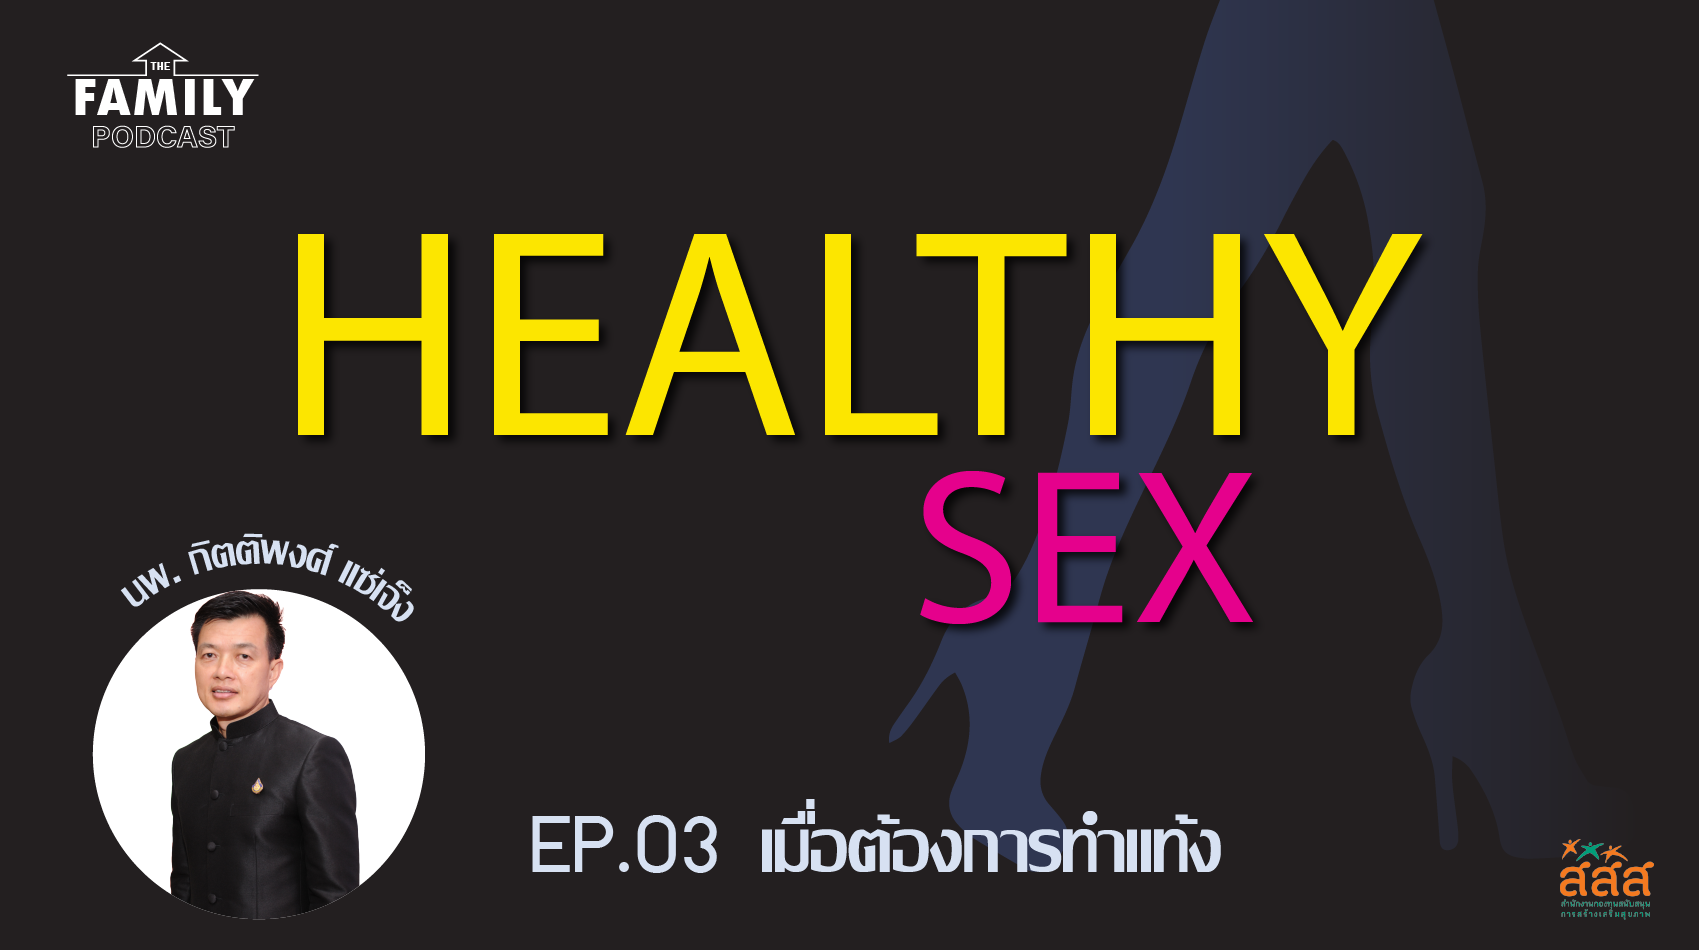 The Family Podcast Healthy Sex EP.03  เมื่อต้องการทำแท้ง